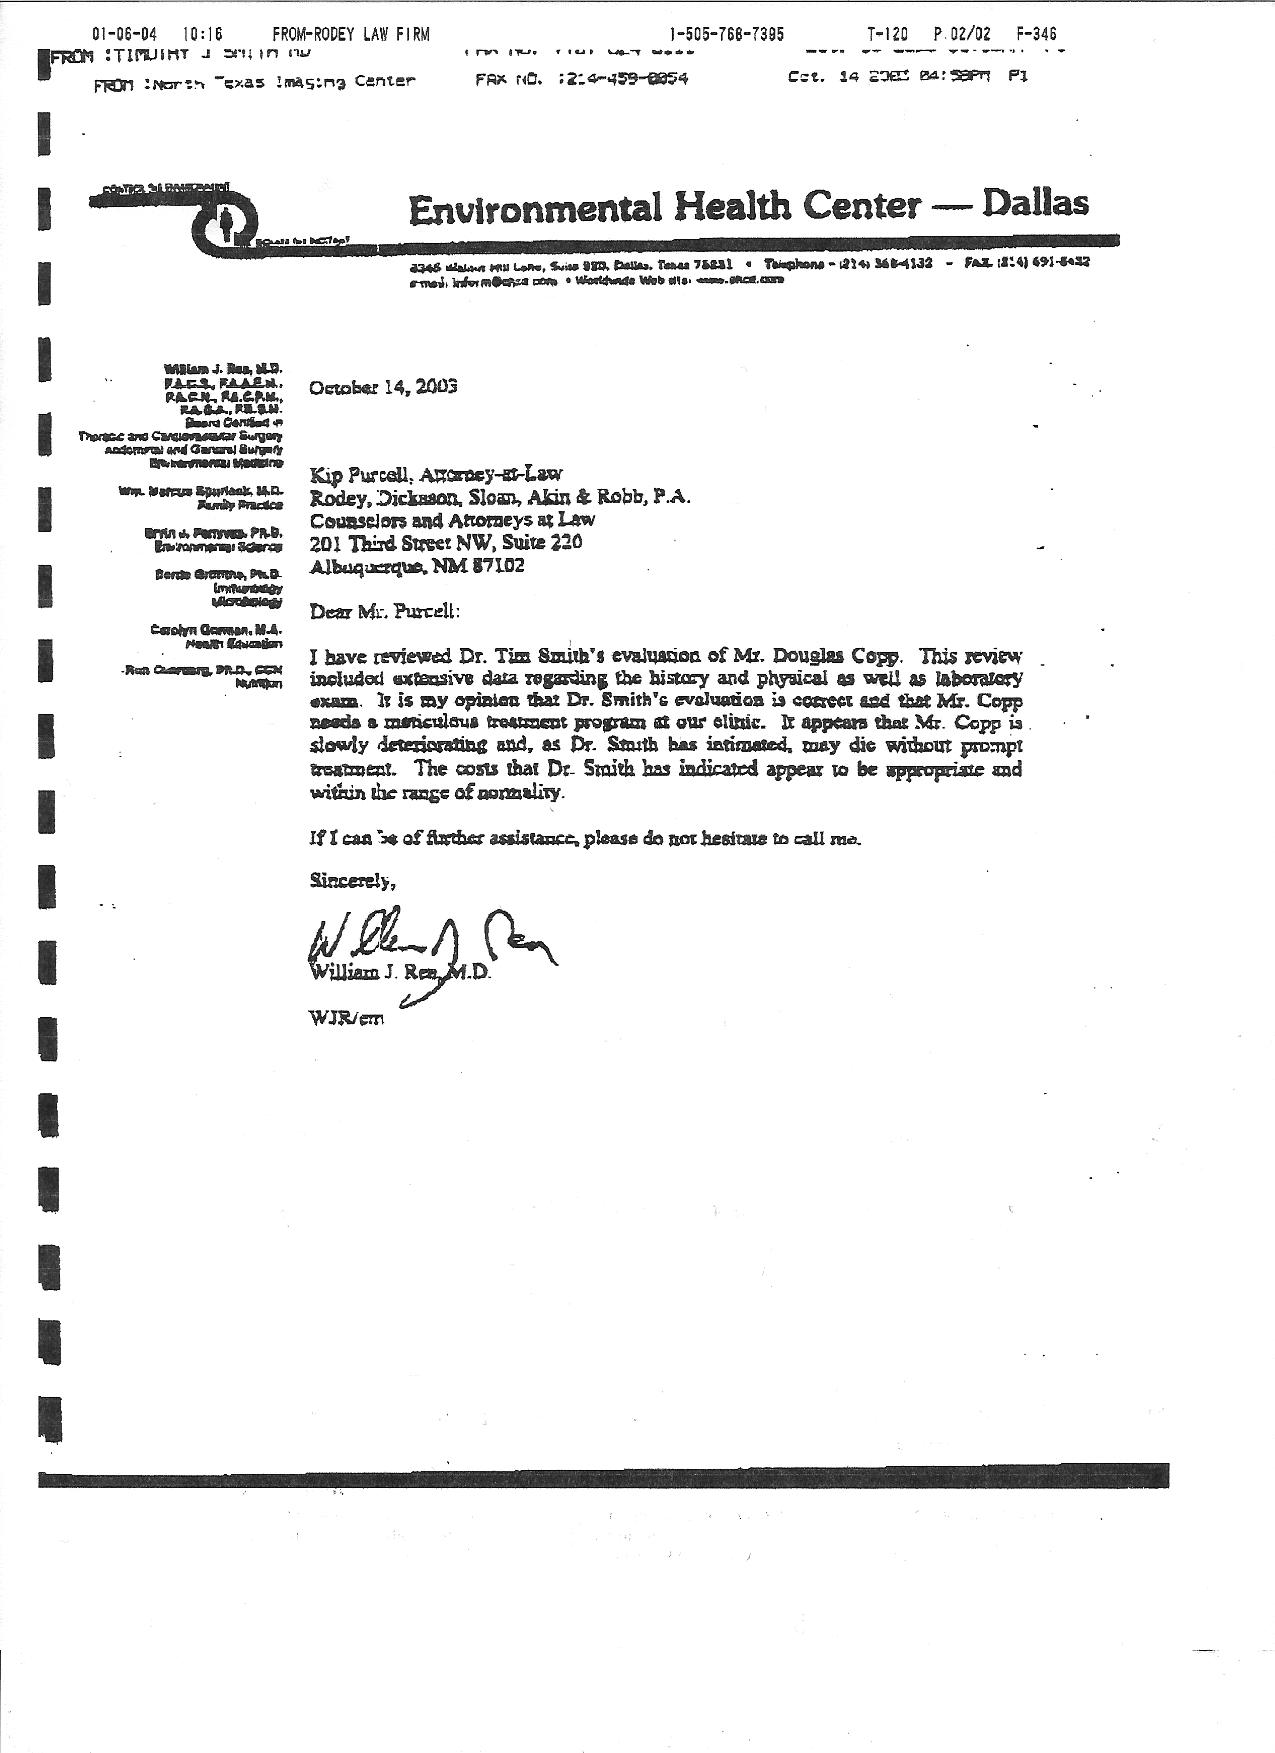 Copy Of Dr. William J. Rea's Letter